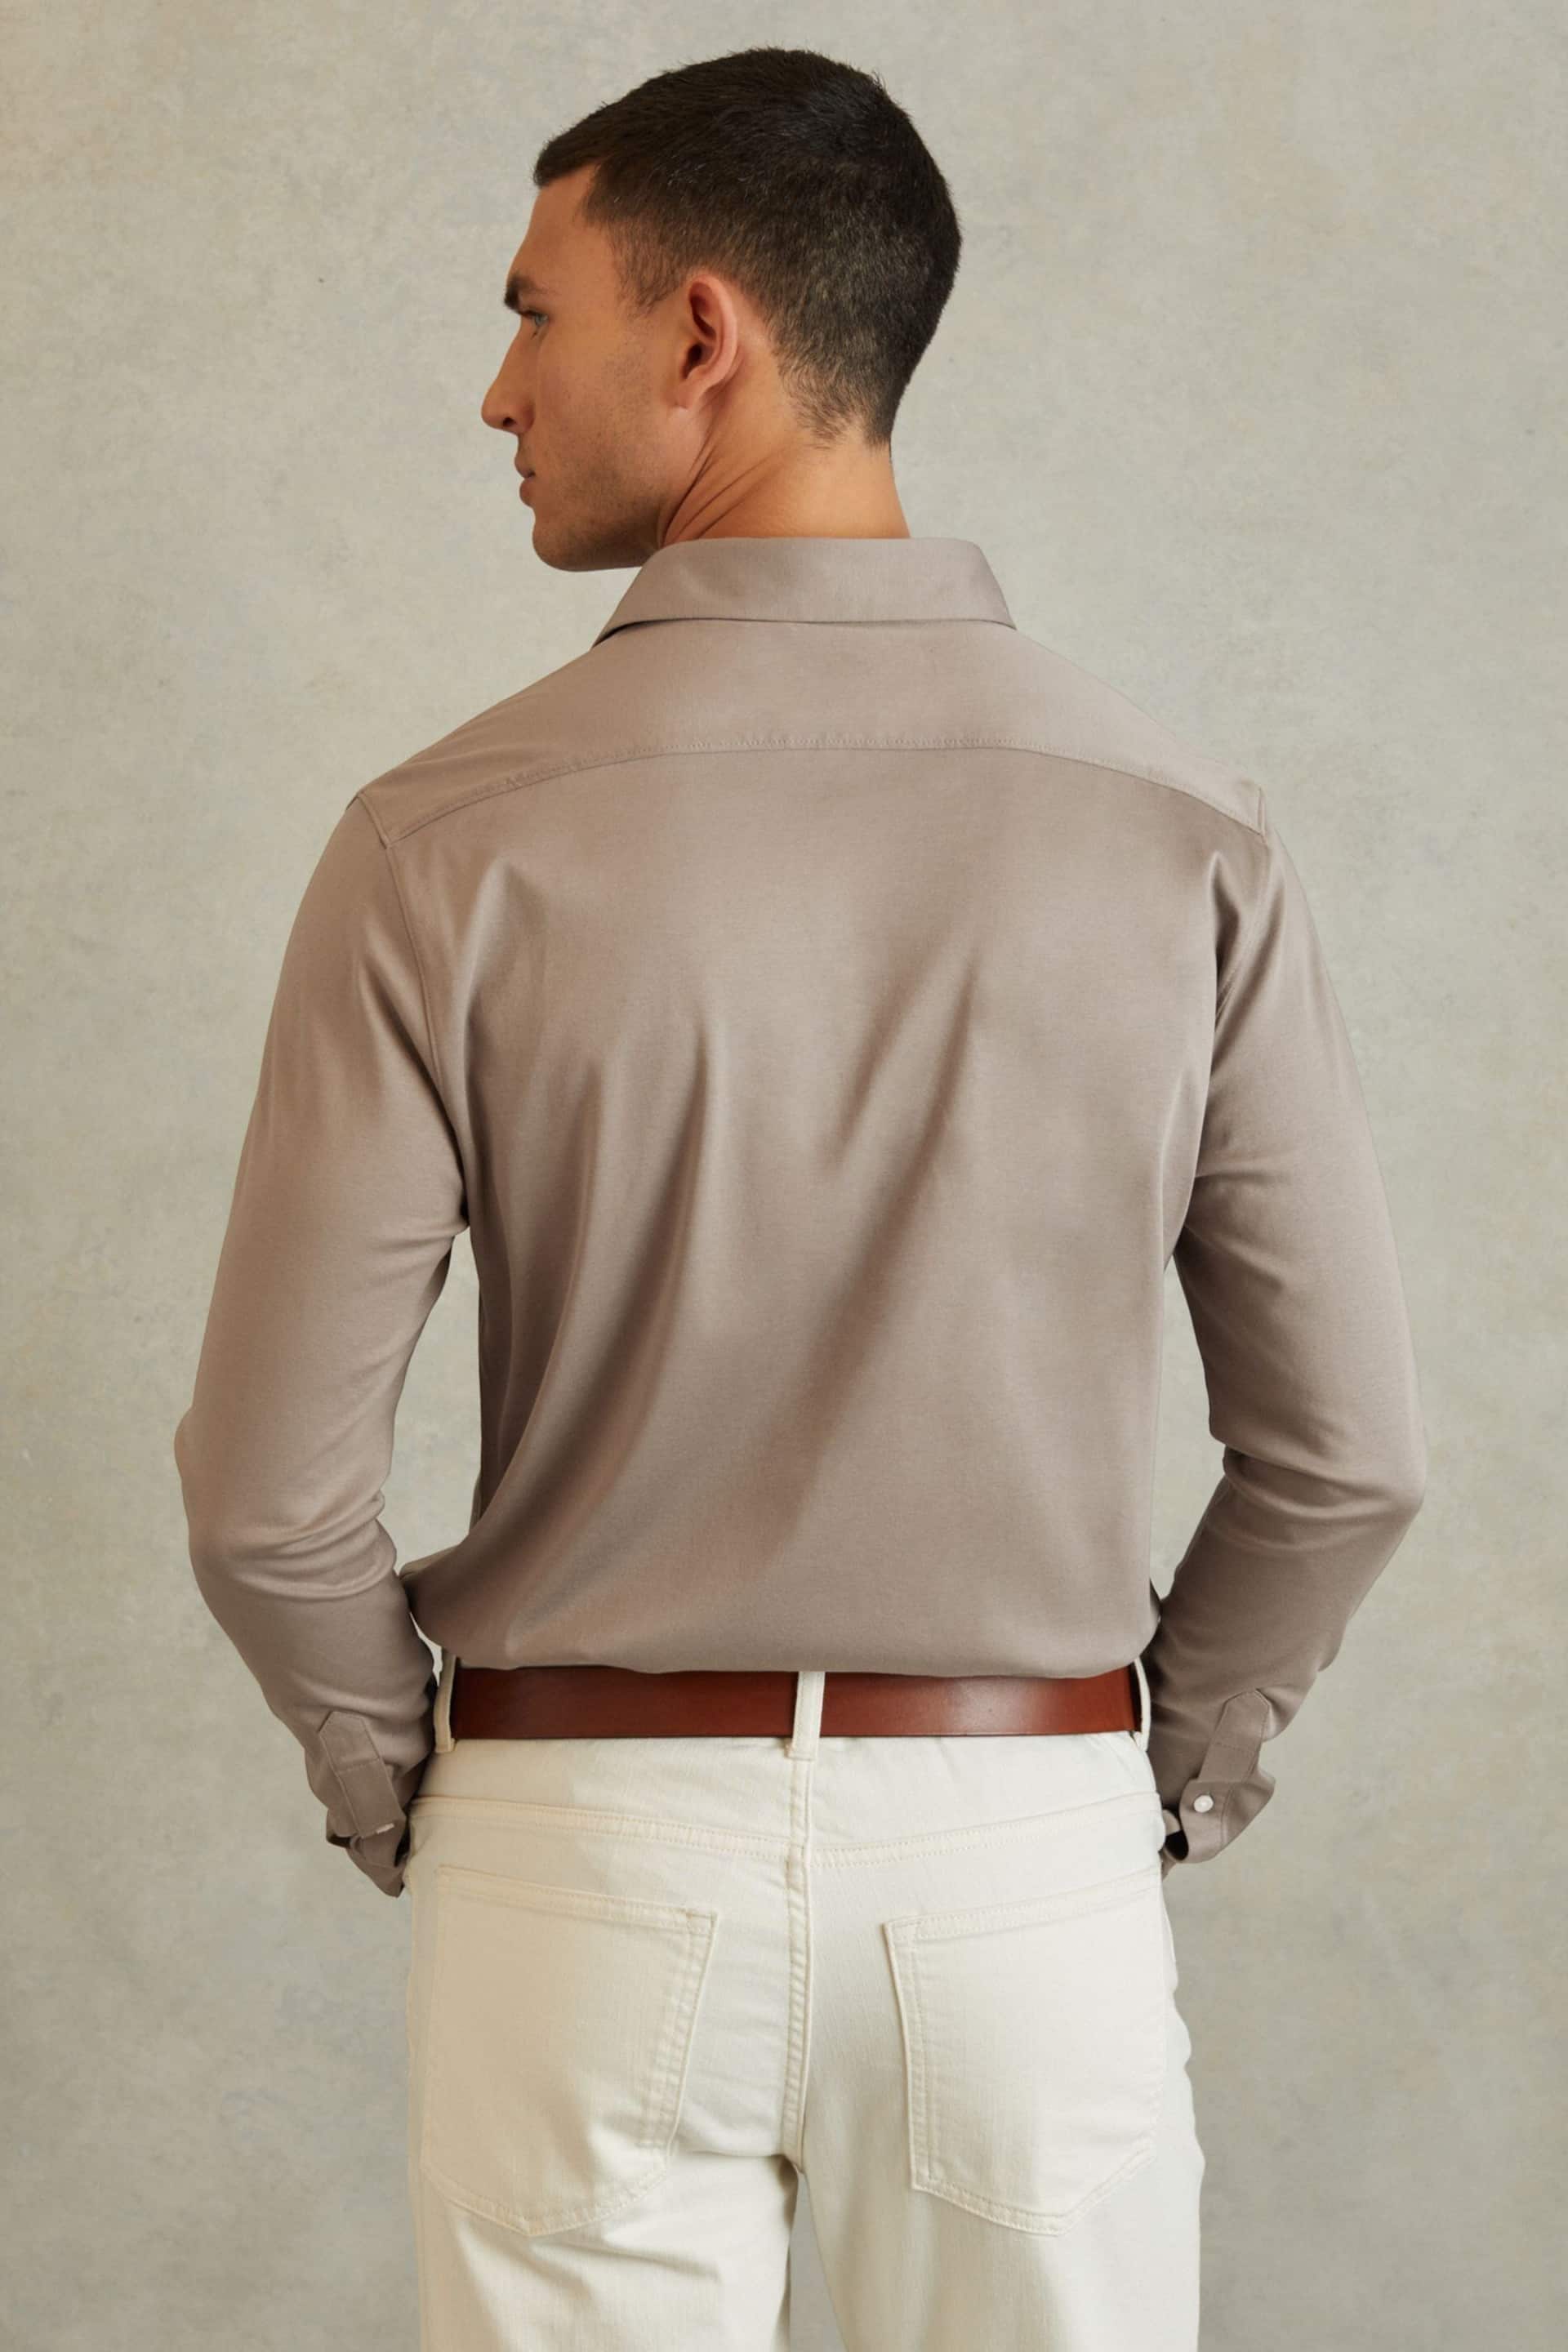 Reiss Cinder Viscount Slim Fit Mercerised Cotton Jersey Shirt - Image 4 of 5